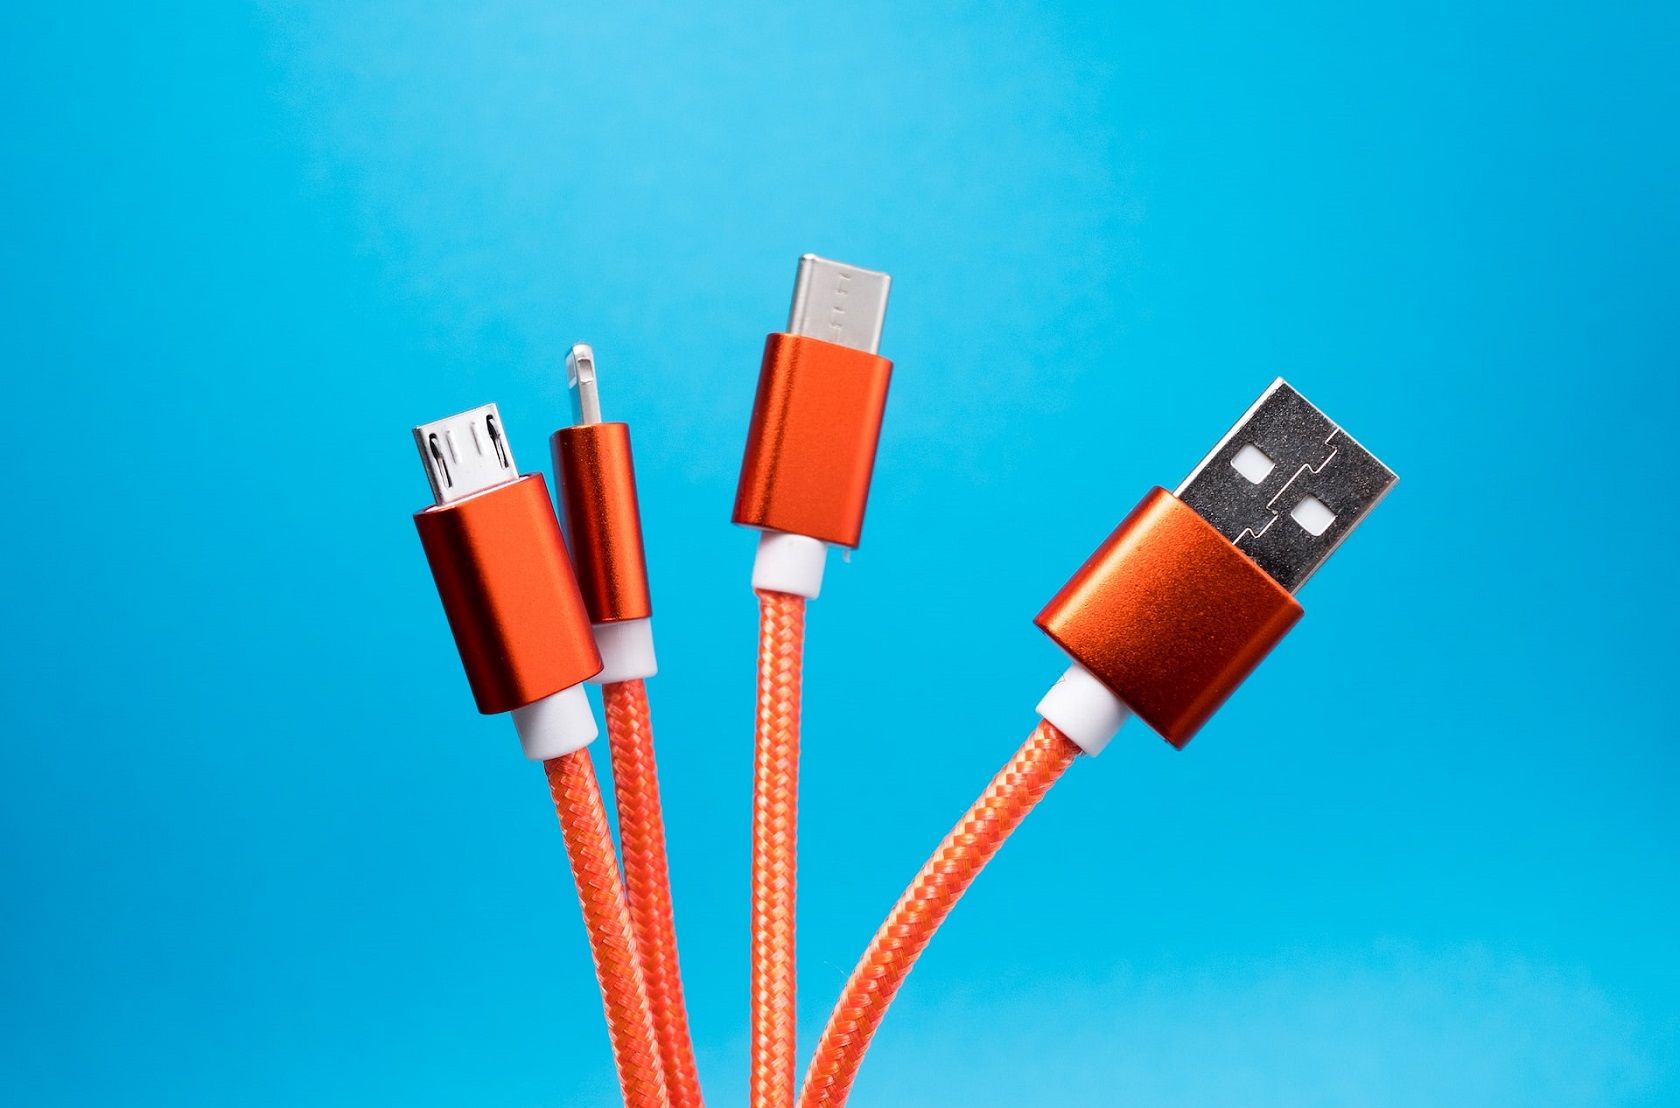 Câbles USB orange